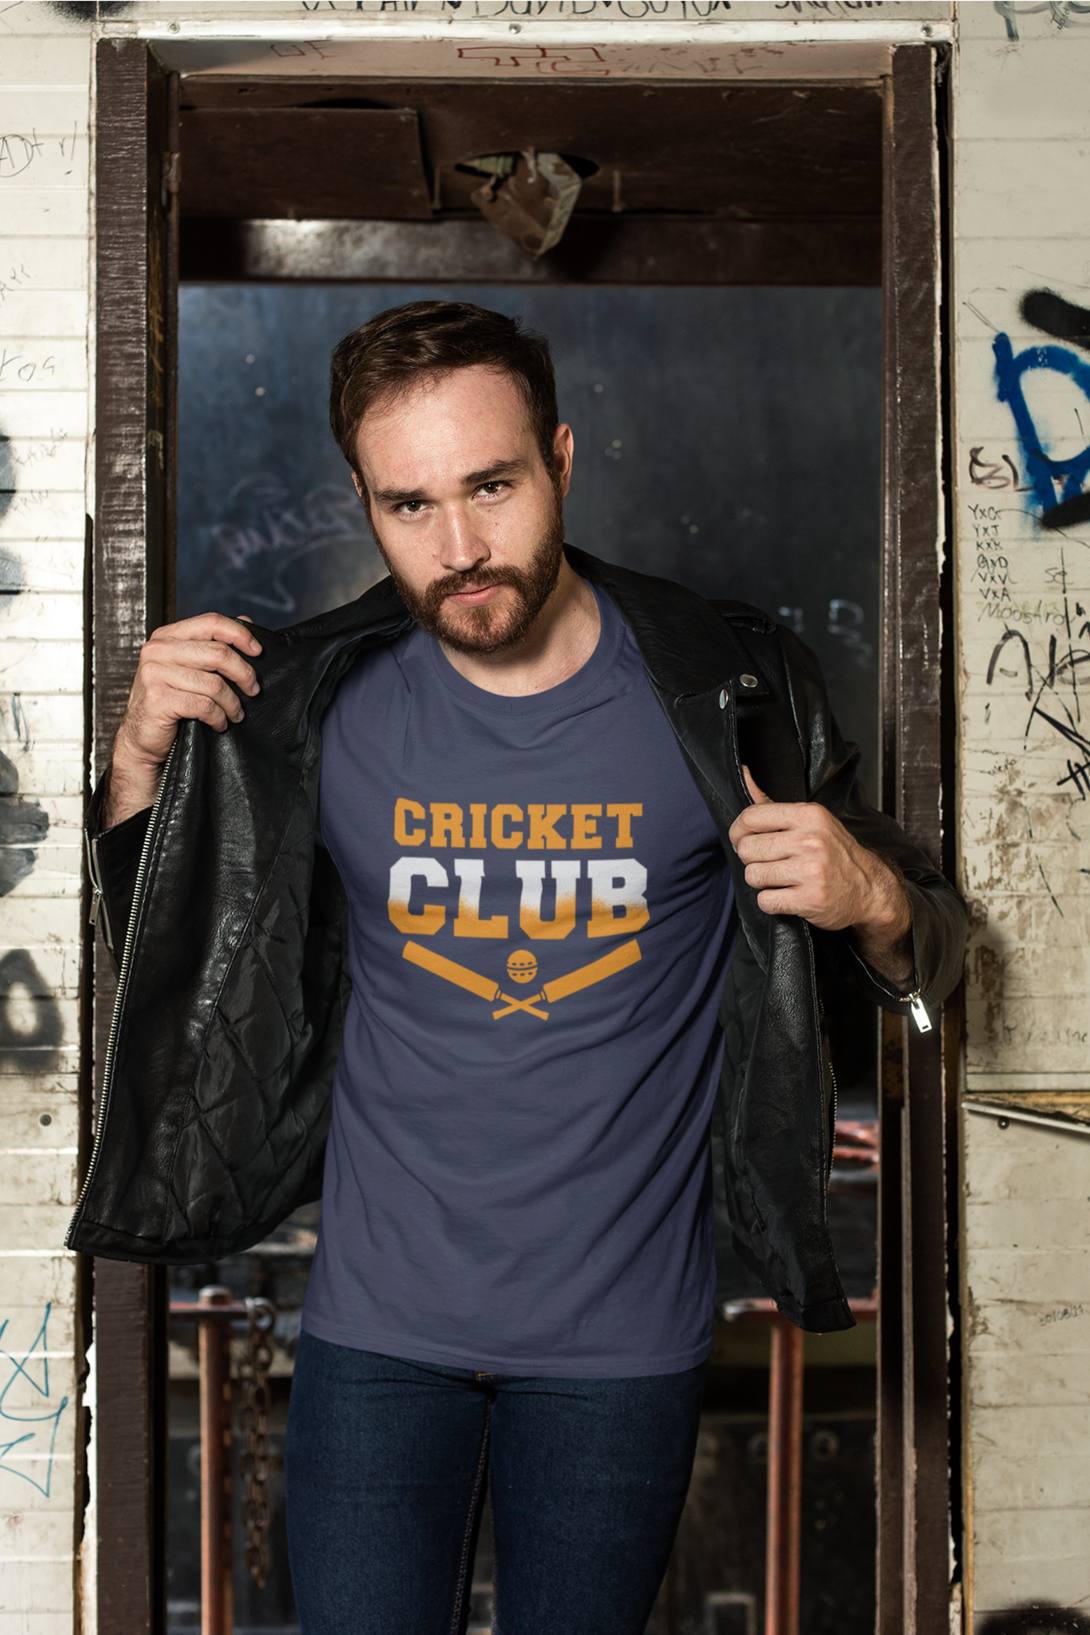 Cricket Club Printed T-Shirt For Men - WowWaves - 5